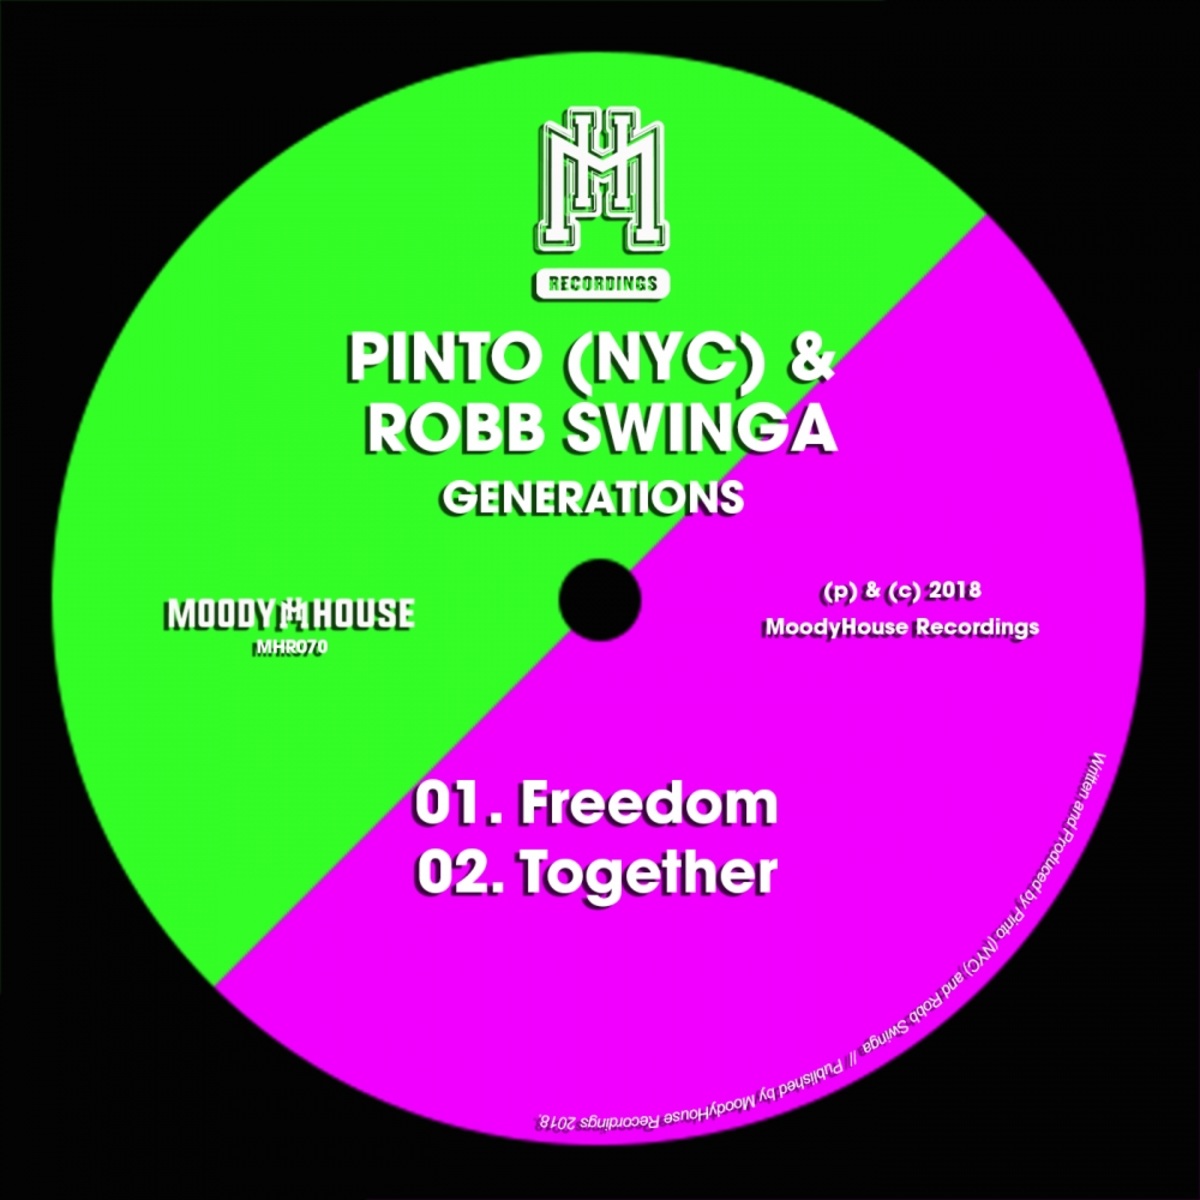 Pinto (NYC) & Robb Swinga - Generations / MoodyHouse Recordings